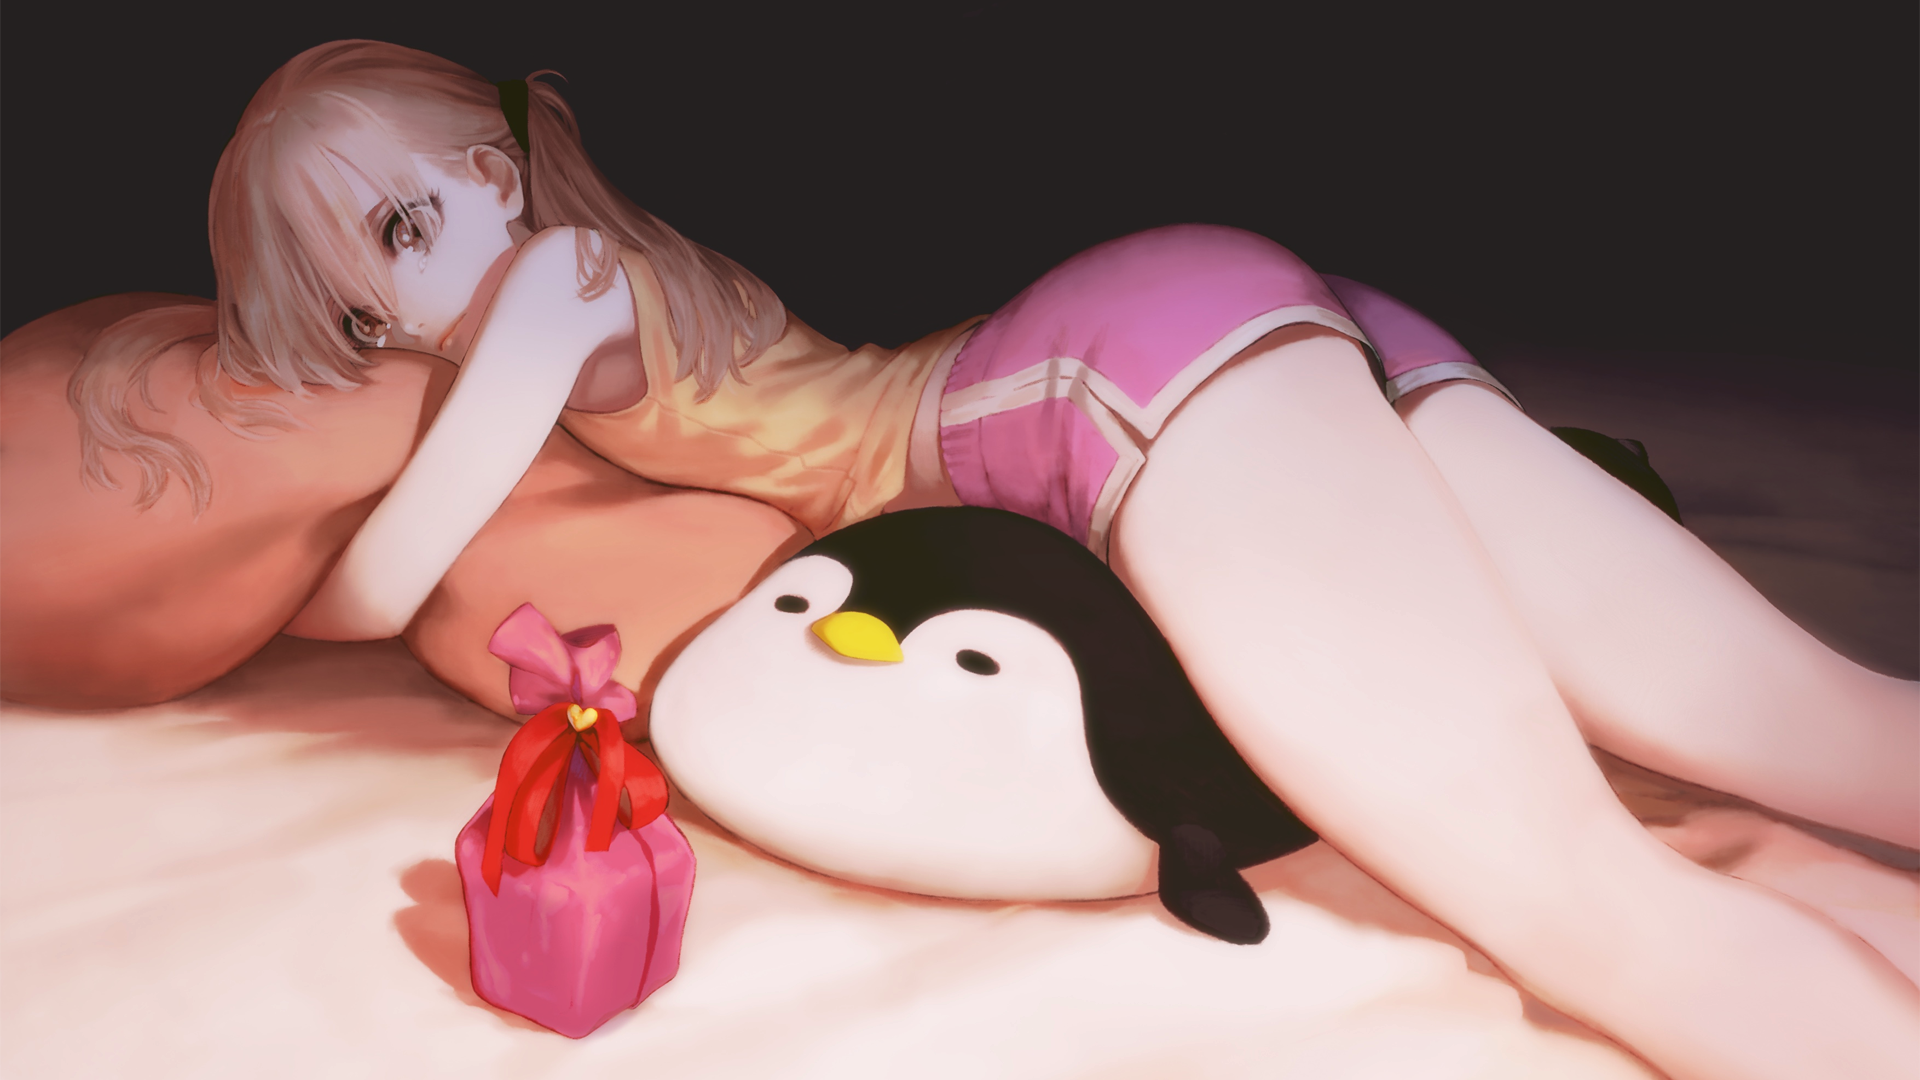 Anime 1920x1080 anime anime girls blonde shorts crying penguins presents white skin pillow lying on front pillow hug short shorts tank top Navigavi looking at viewer